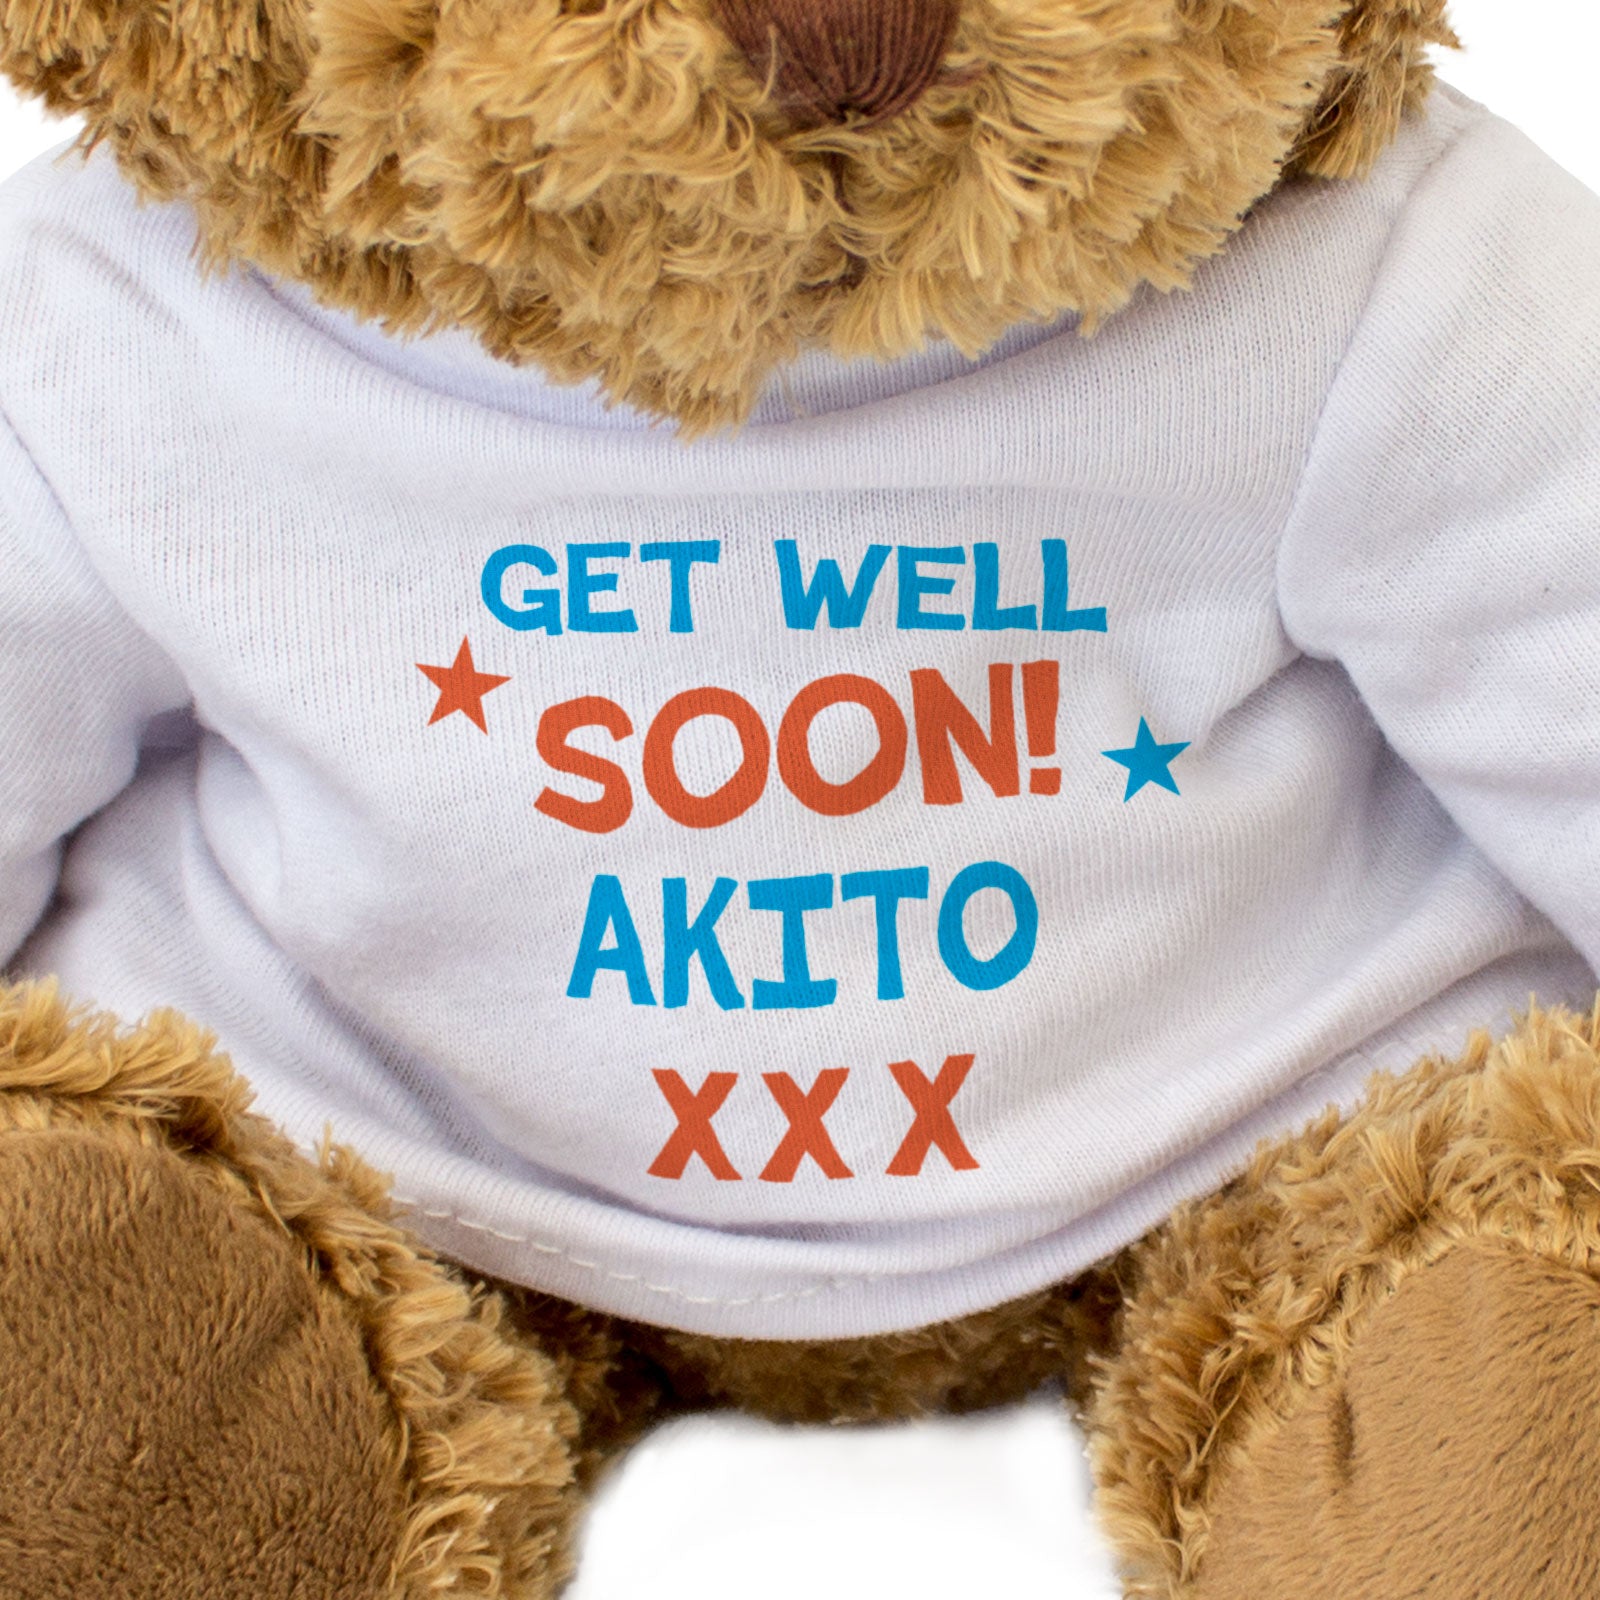 Get Well Soon Akito - Teddy Bear